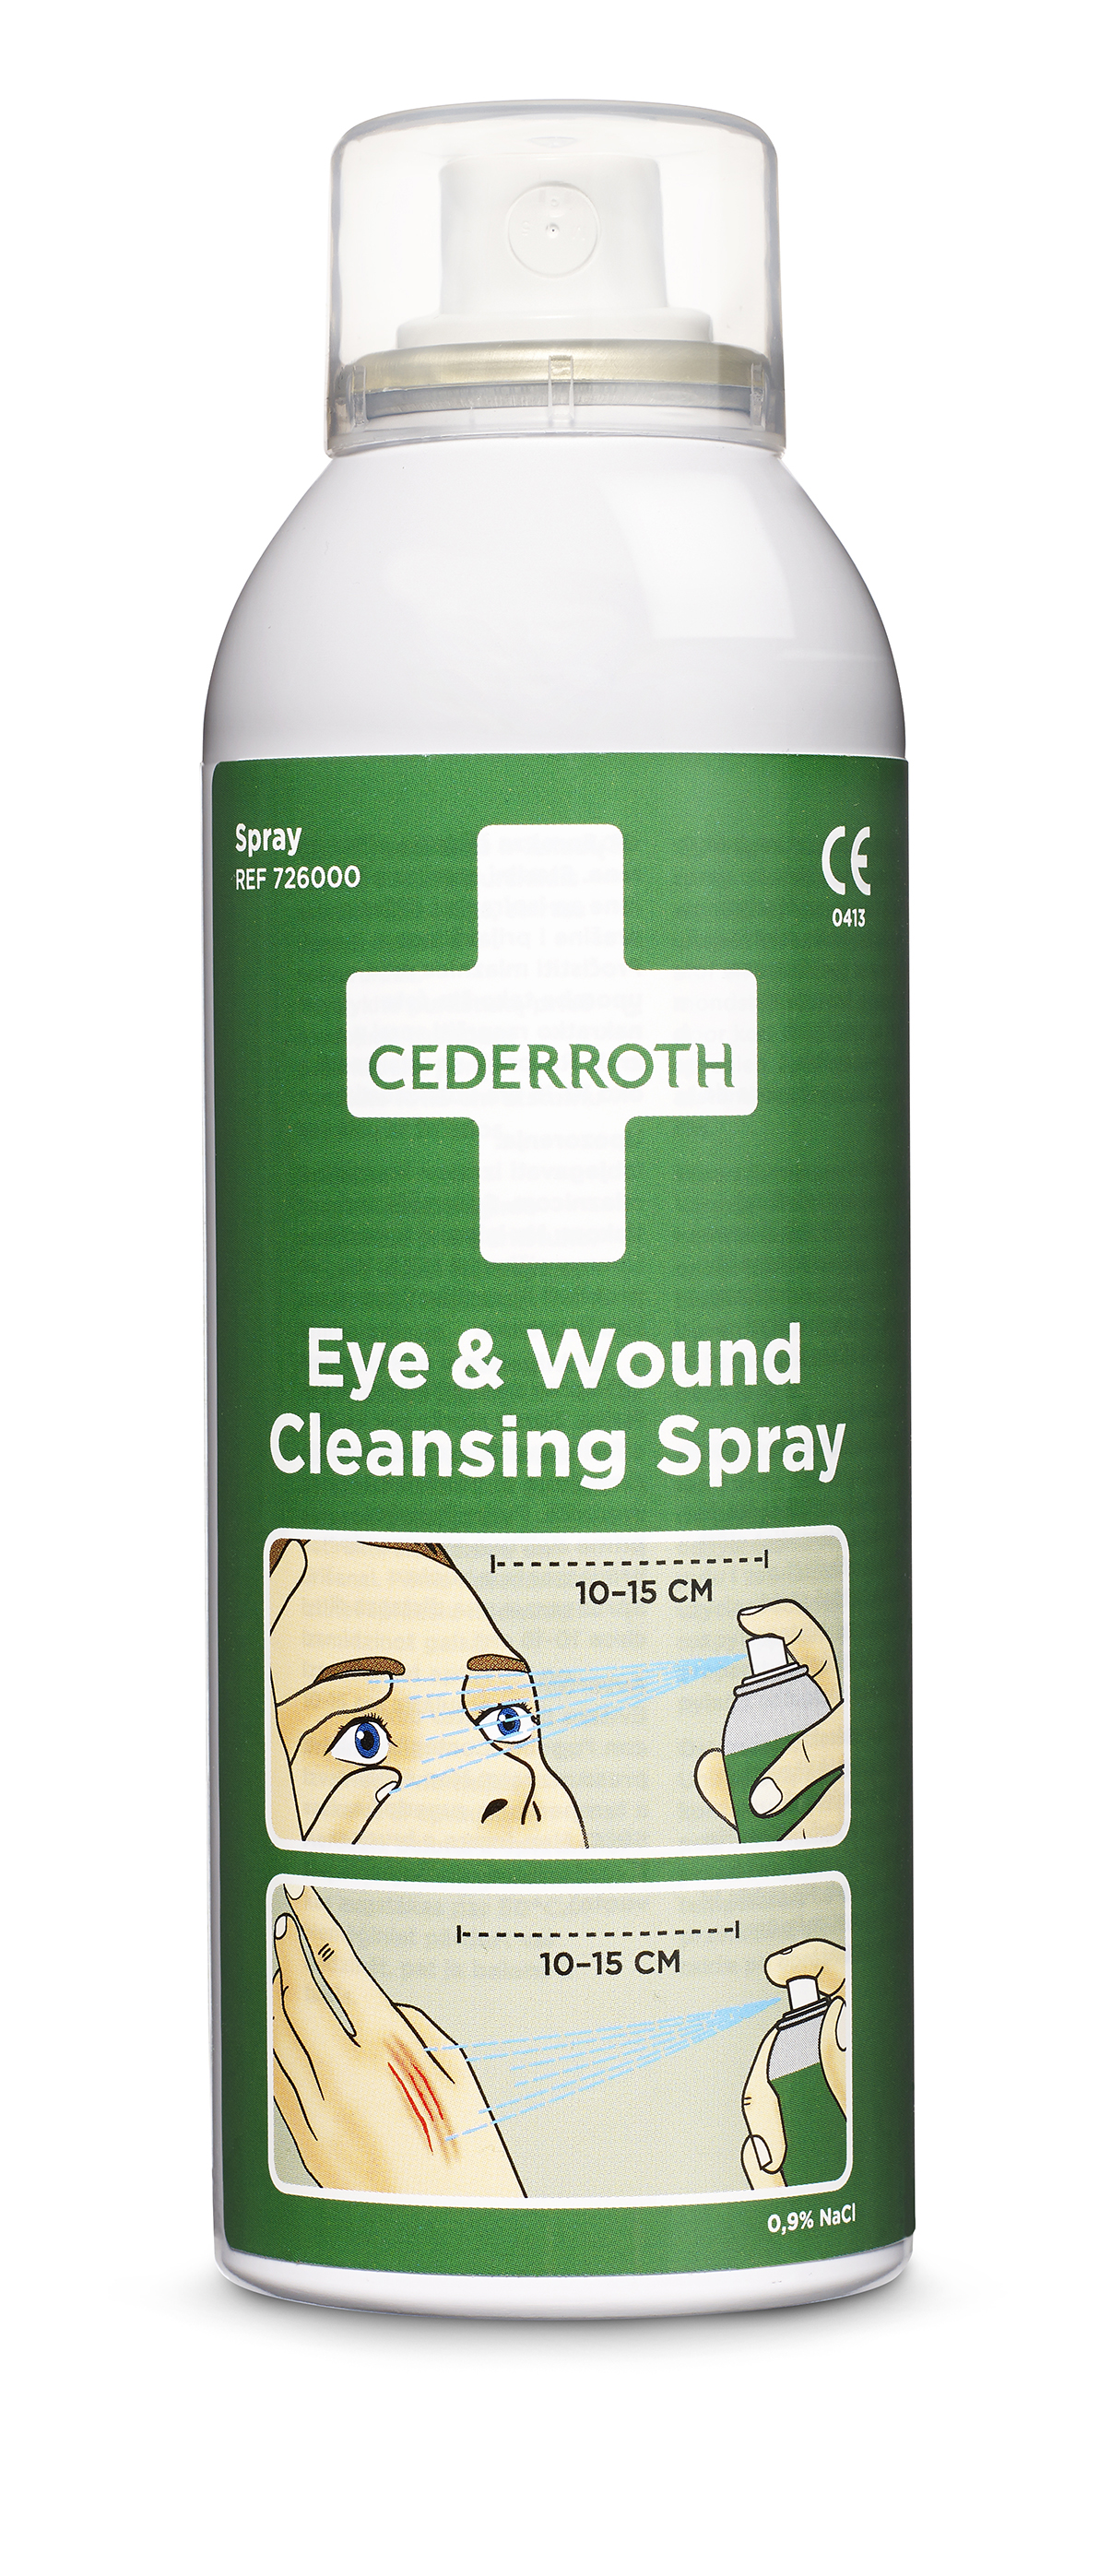 Cederroth Eye & Wound Clean